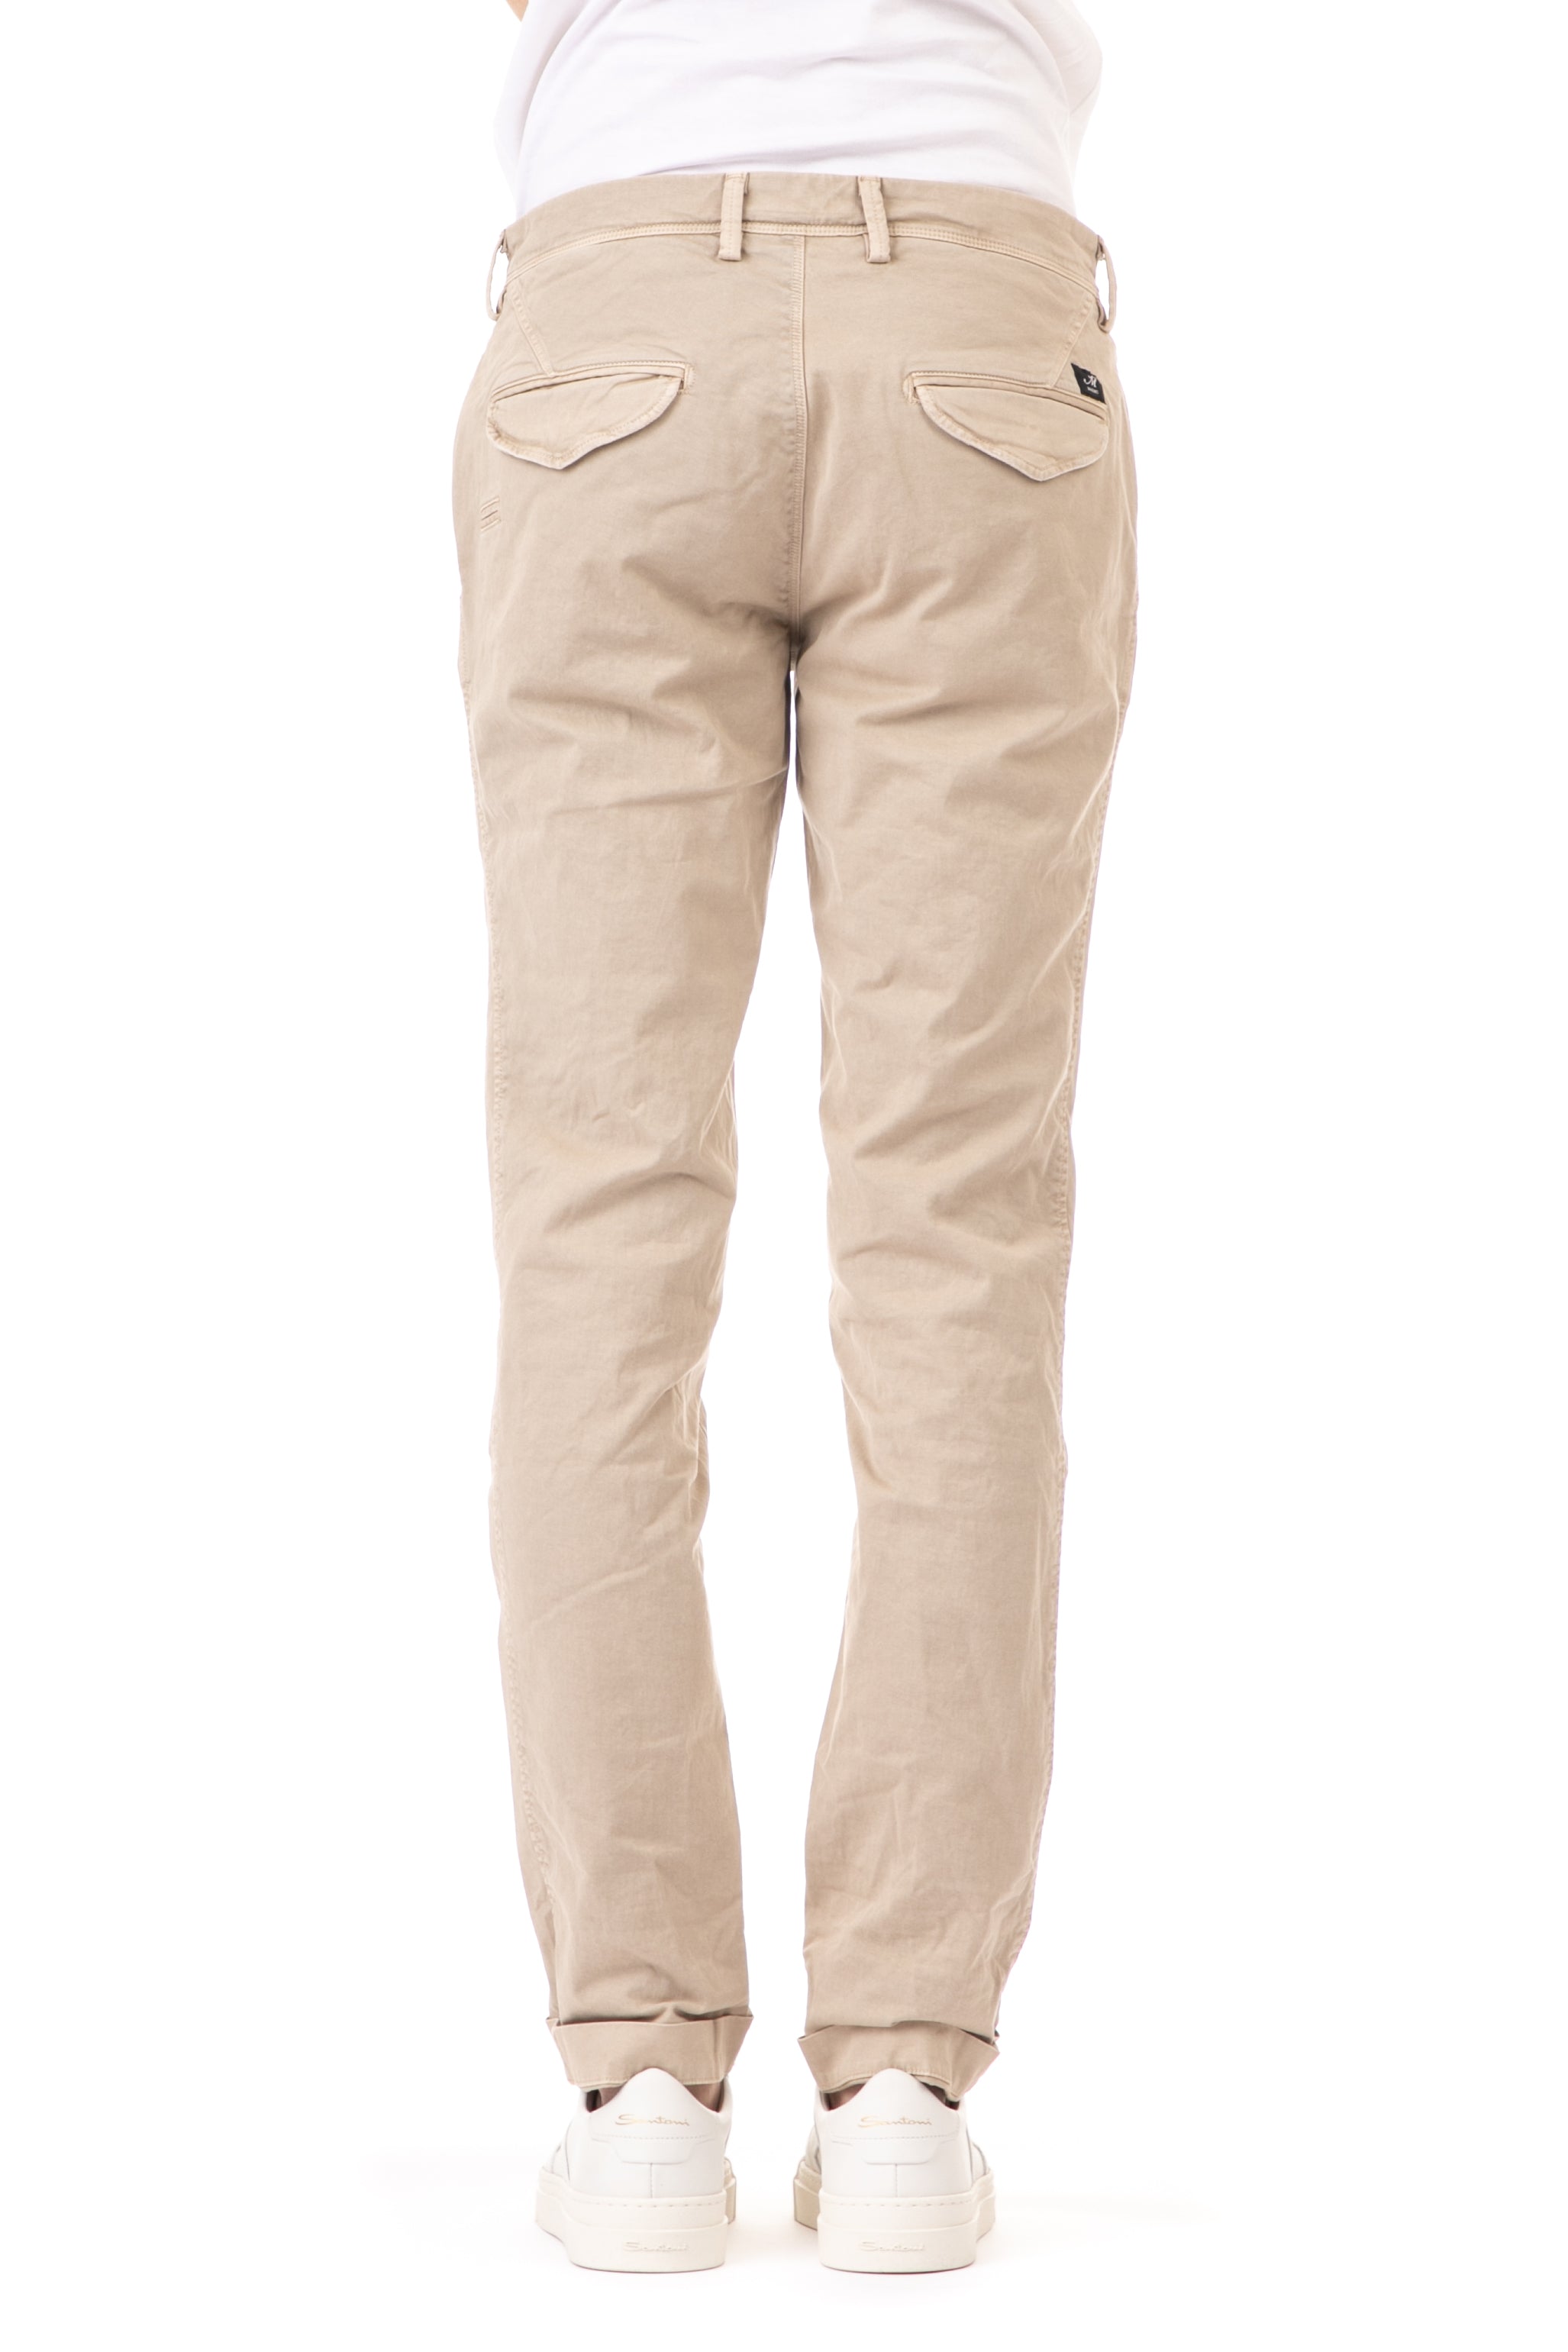 Pantalone in cotone-lyocell modello eisenhower